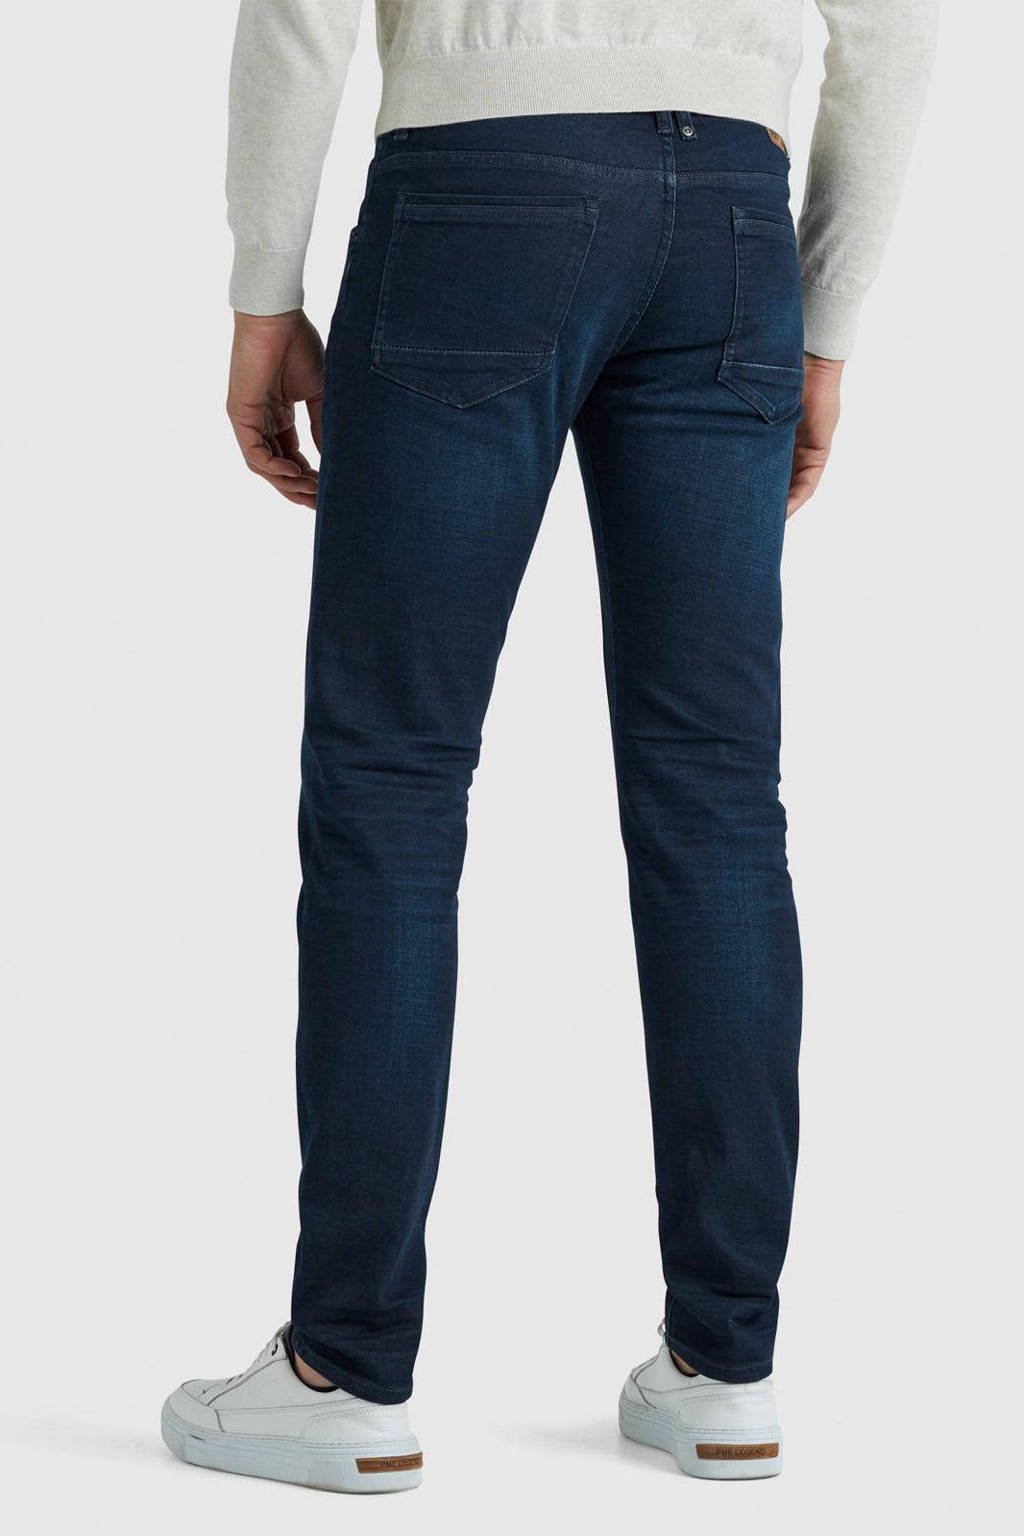 jeans PME slim Legend Tailwheel wehkamp | dds fit